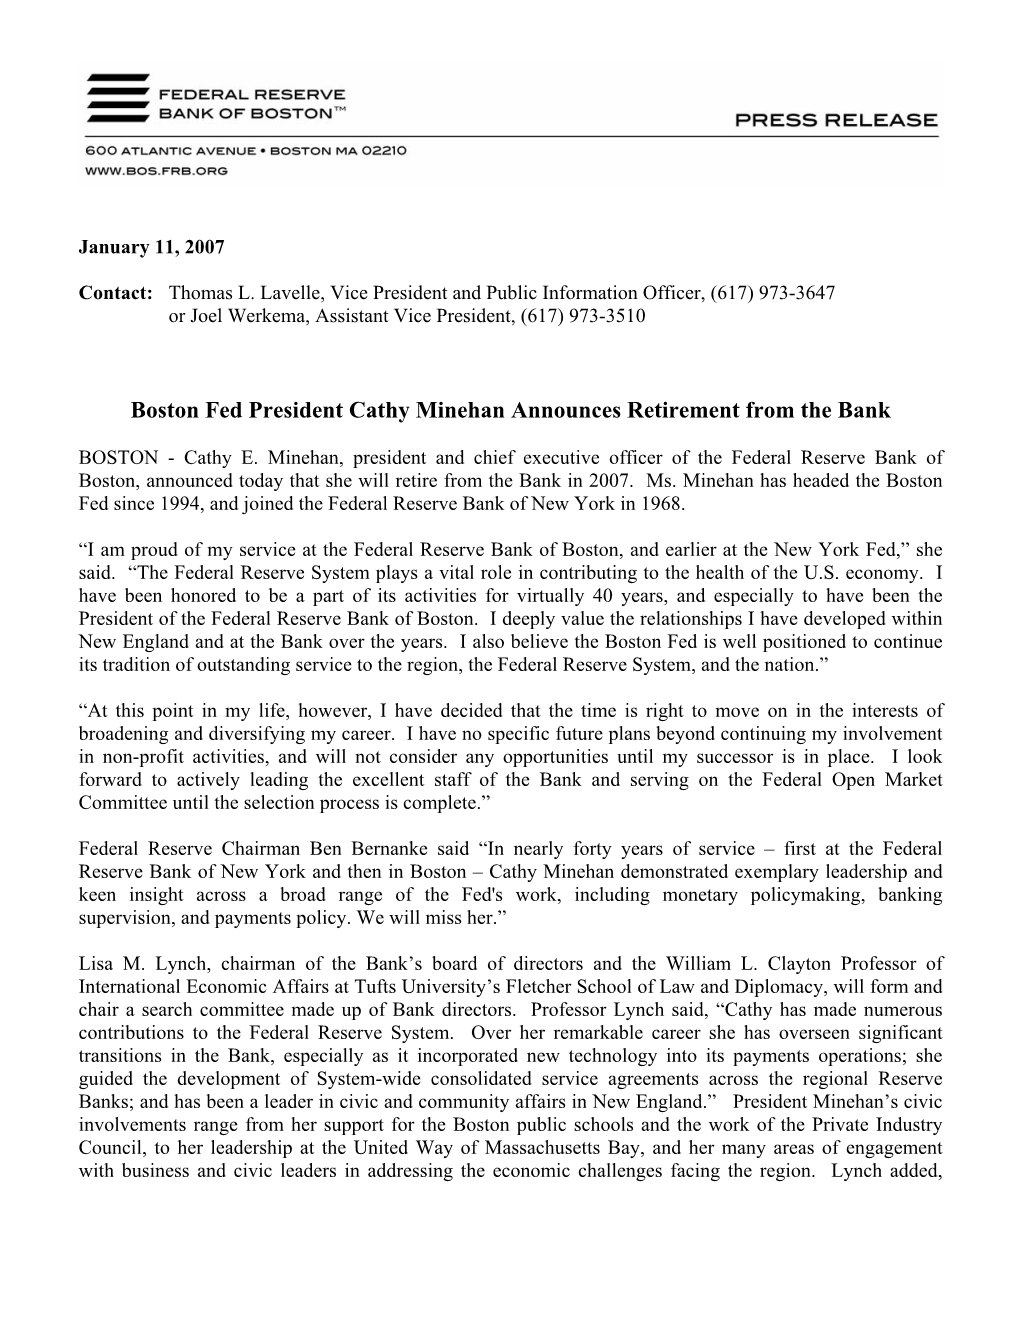 Press Release: Boston Fed President Cathy Minehan Announces